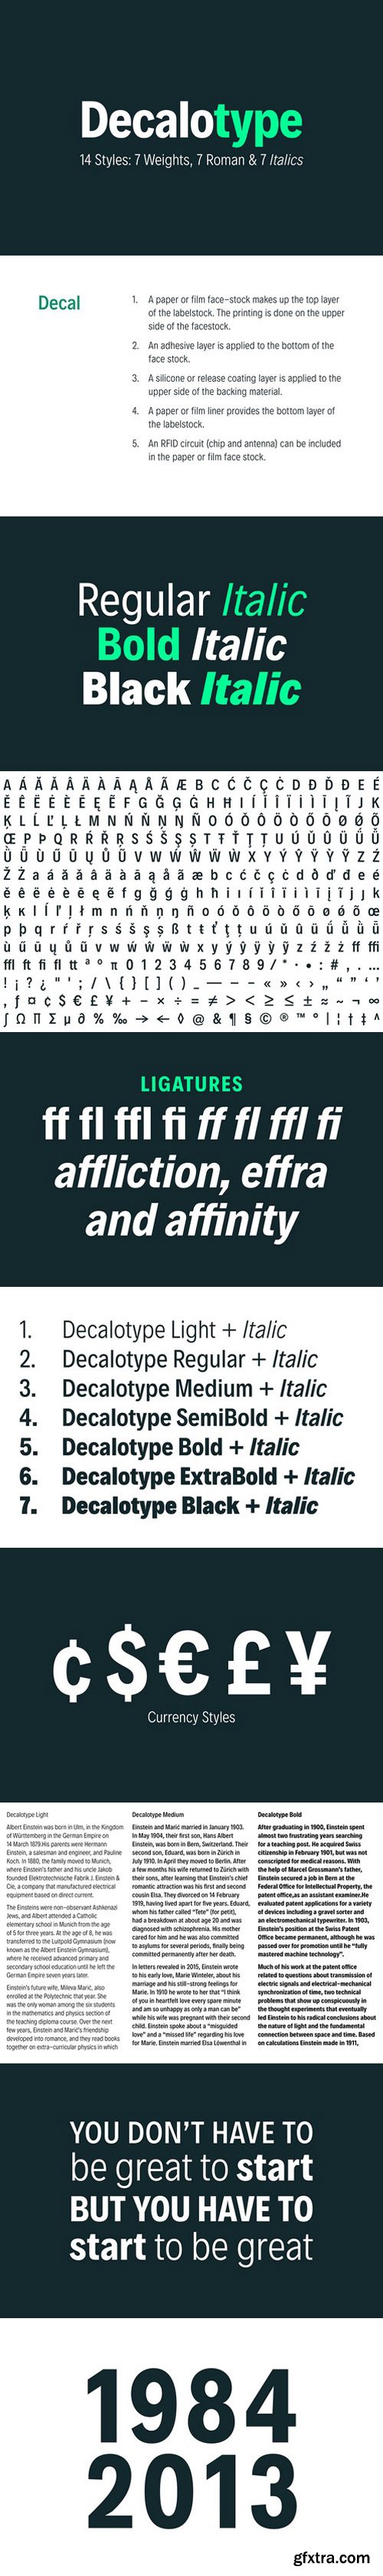 Decalotype Typeface